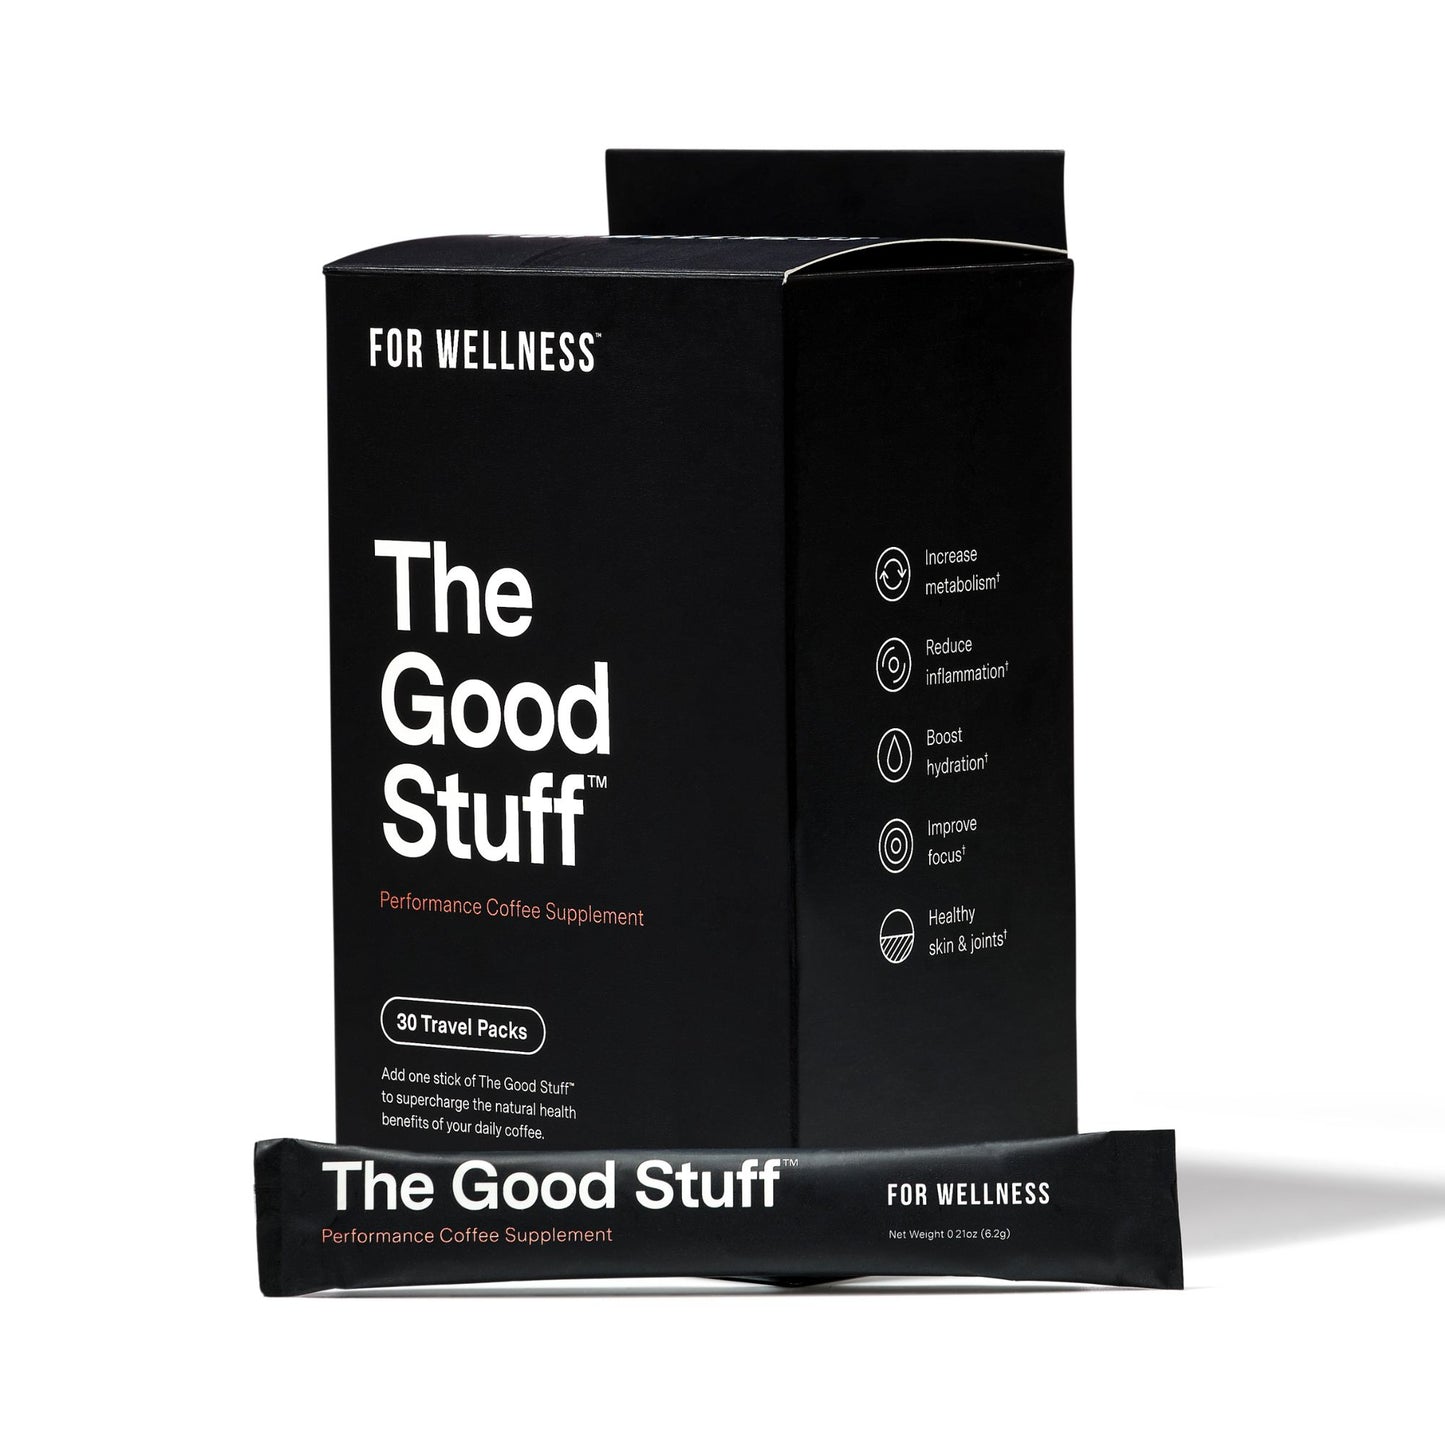 The Good Stuff™